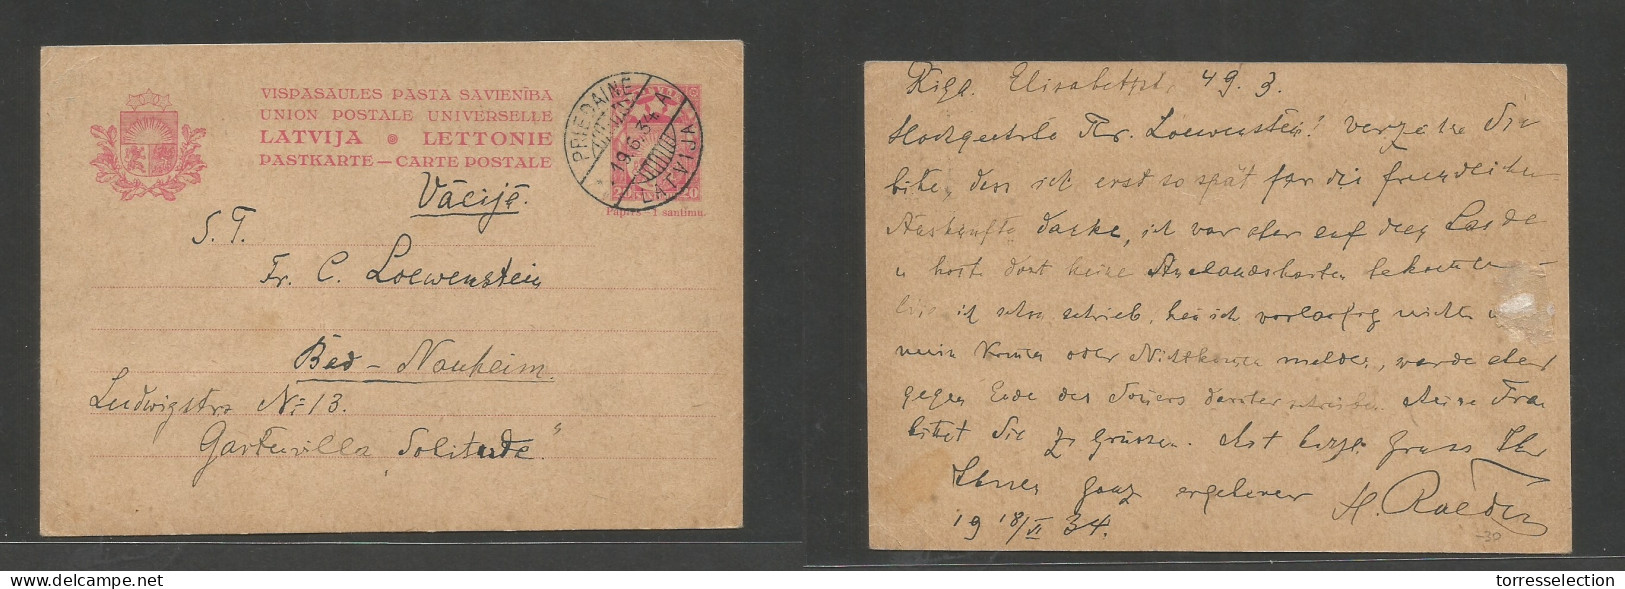 LATVIA. 1934 (19 June) Priedaine - Bed Nouheim. 20s Rose Stat Card. VF Used. SALE. - Lettland